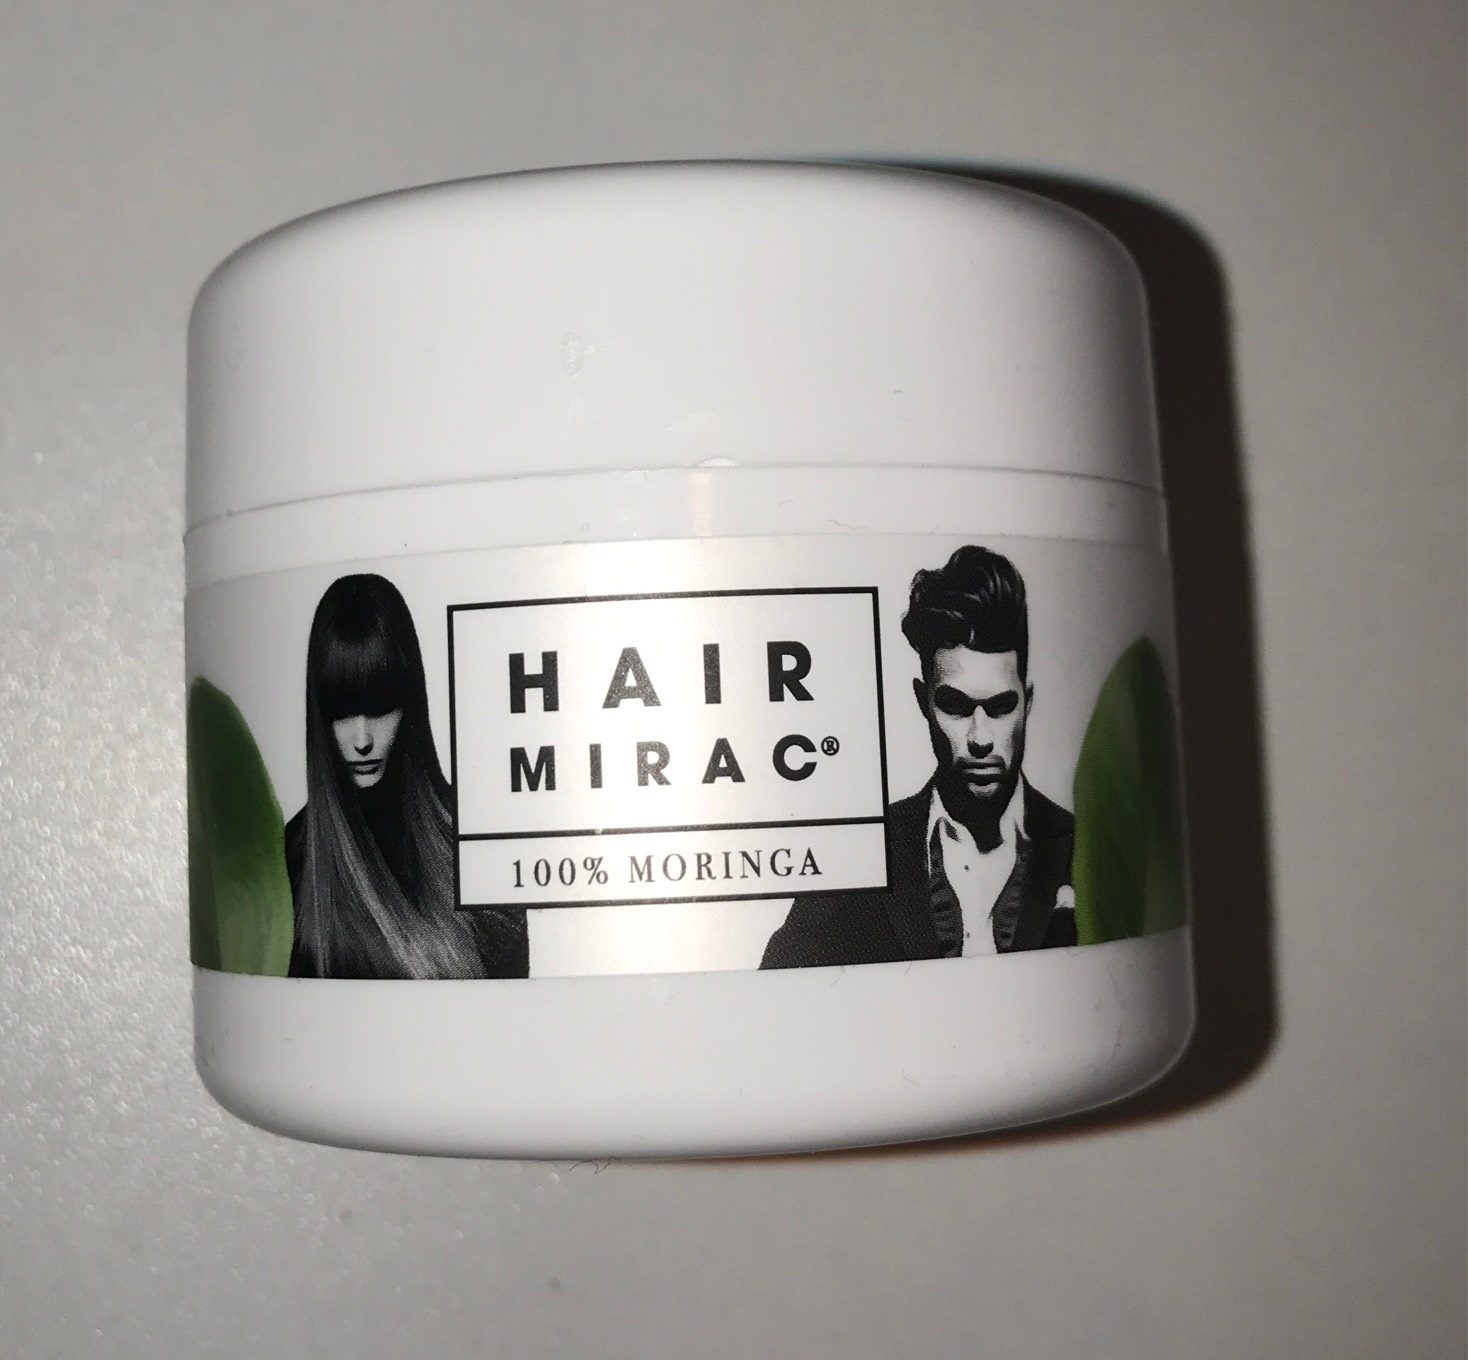 Hair mirac - Product - fr